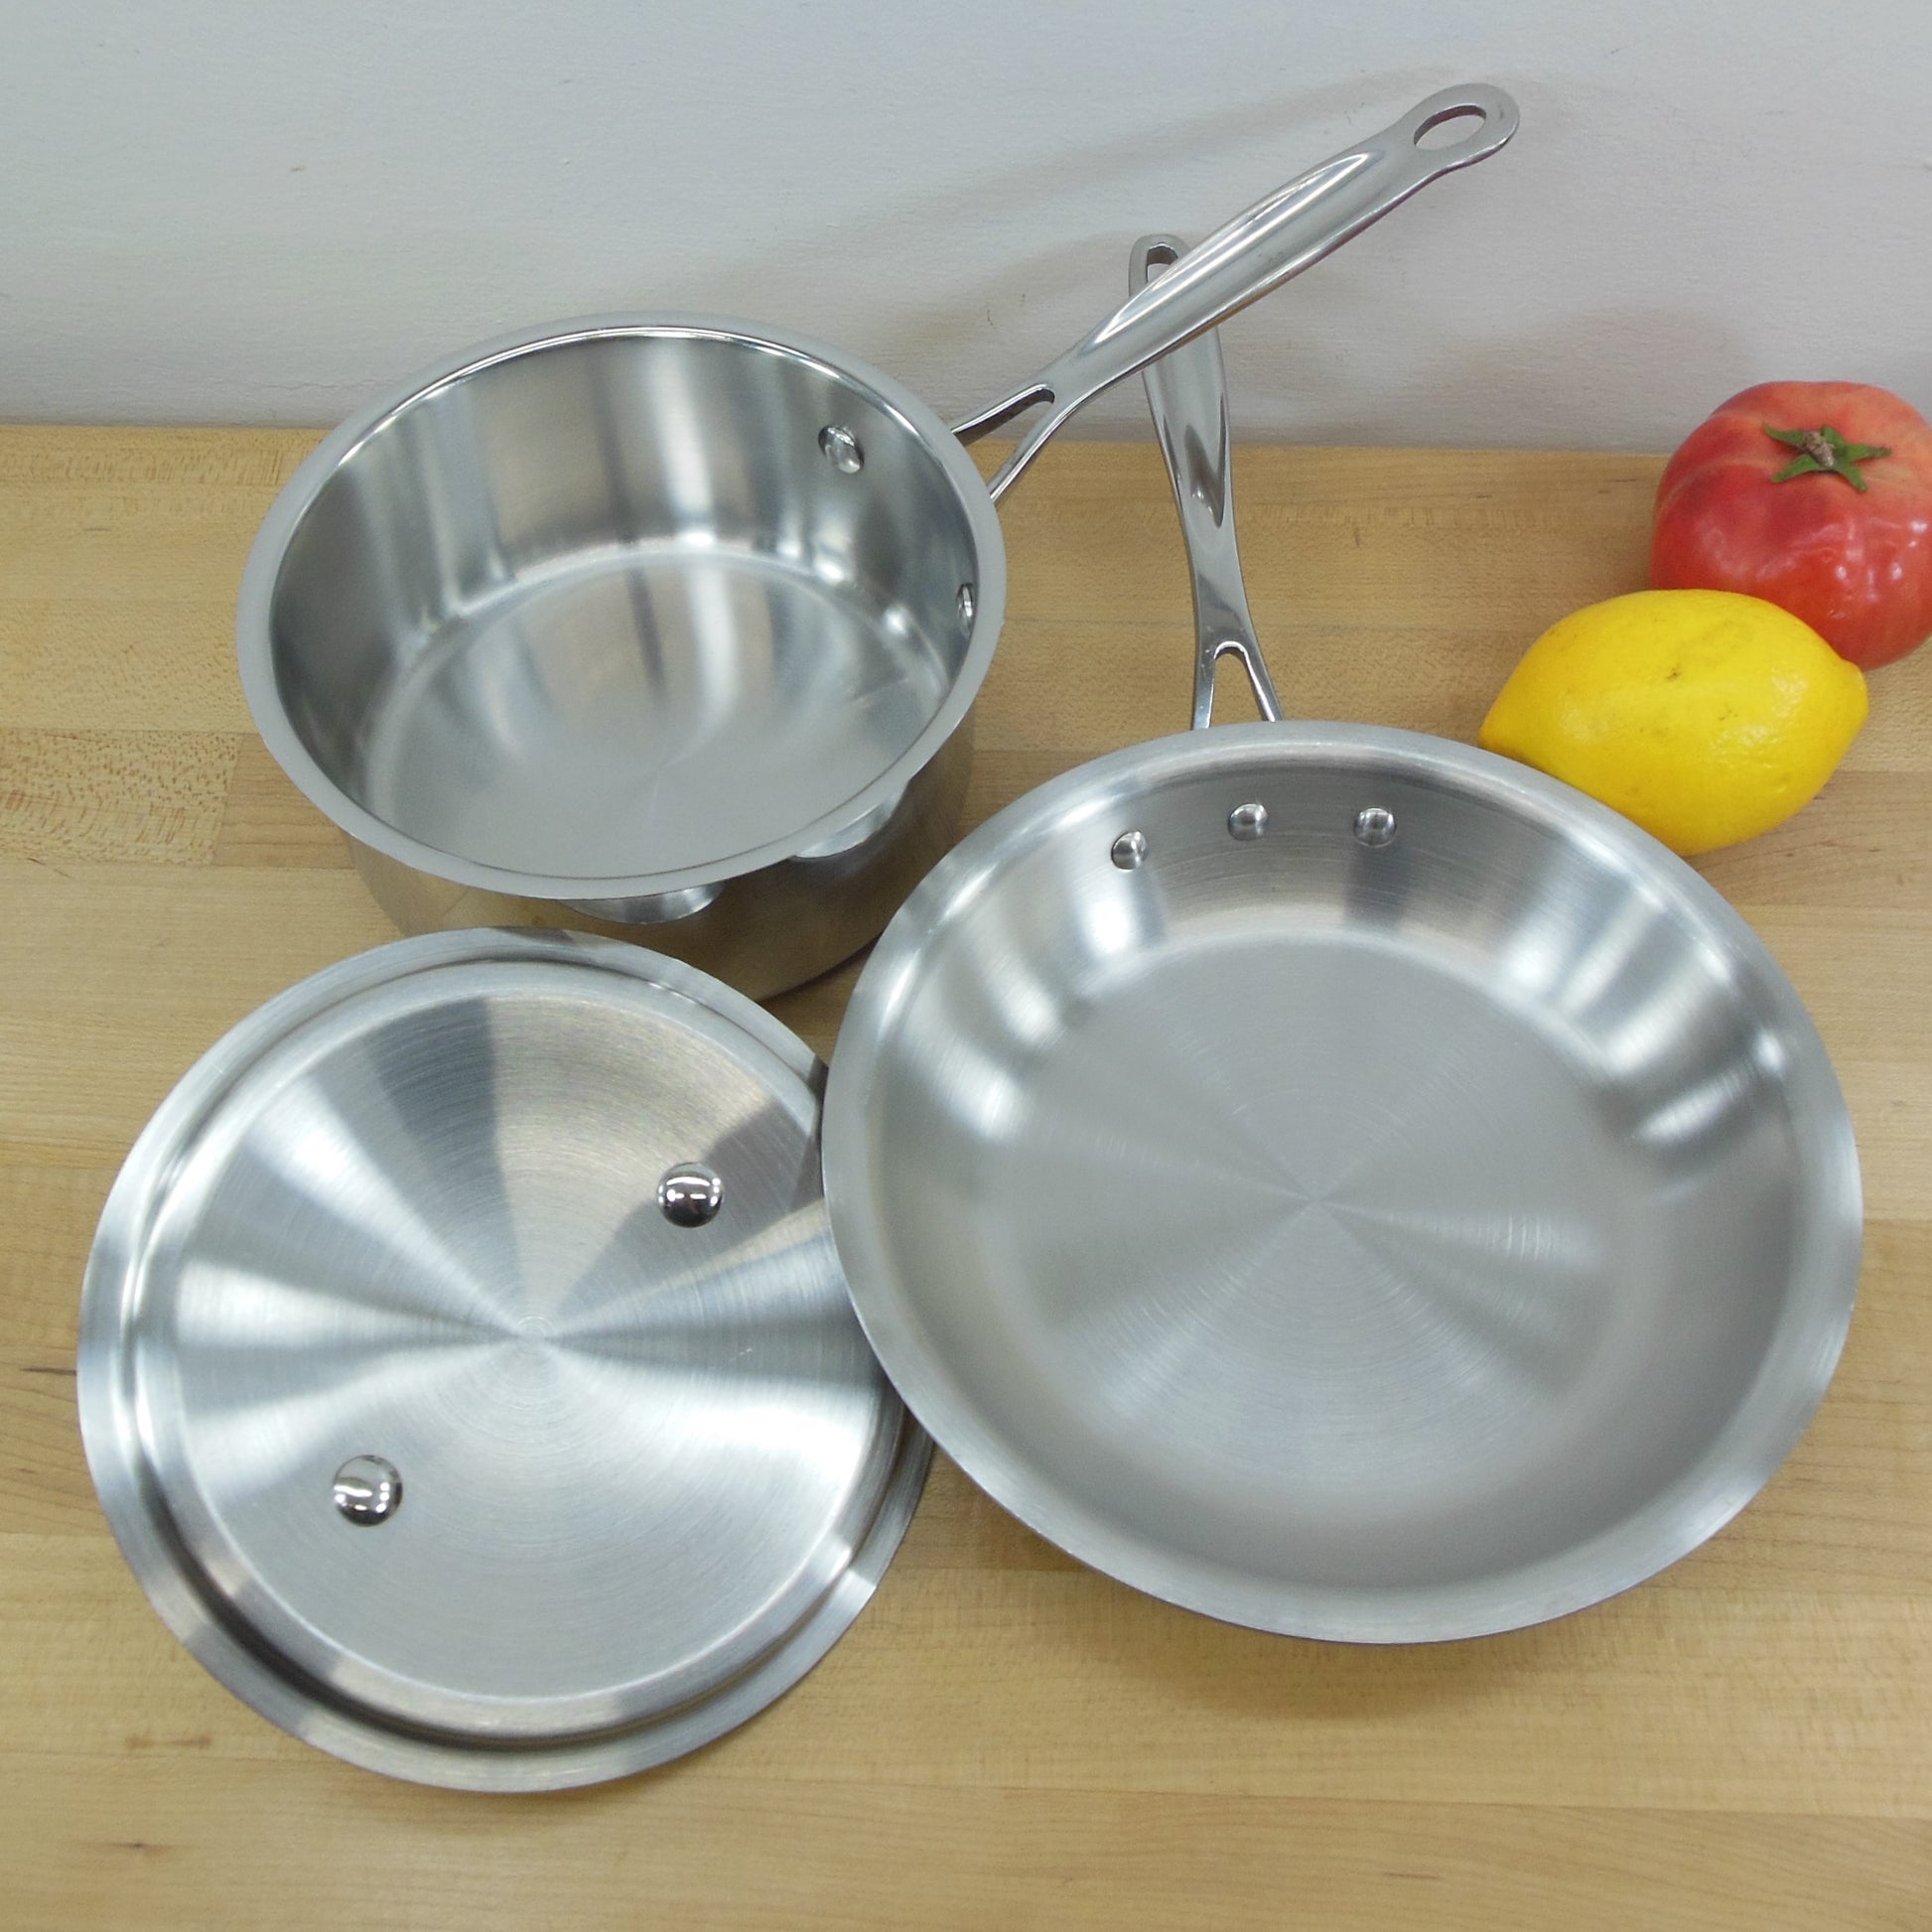 Cuisinart Stainless Steel 1 Quart Saucepan pot/pan with Lid M8619-14